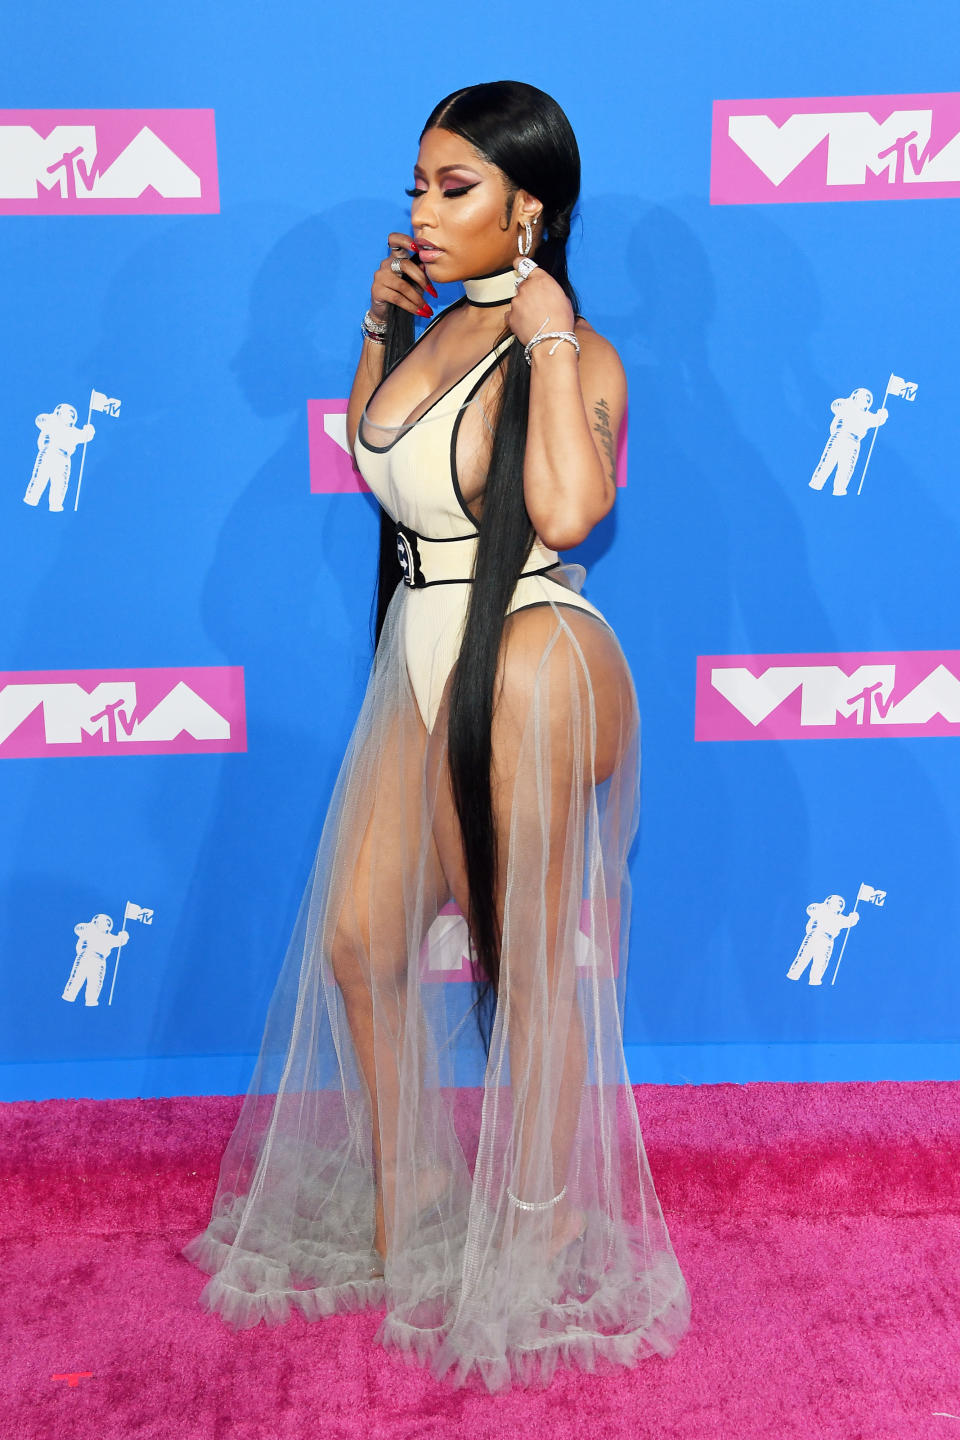 Nikki Minaj at the VMAs on August 21, 2018